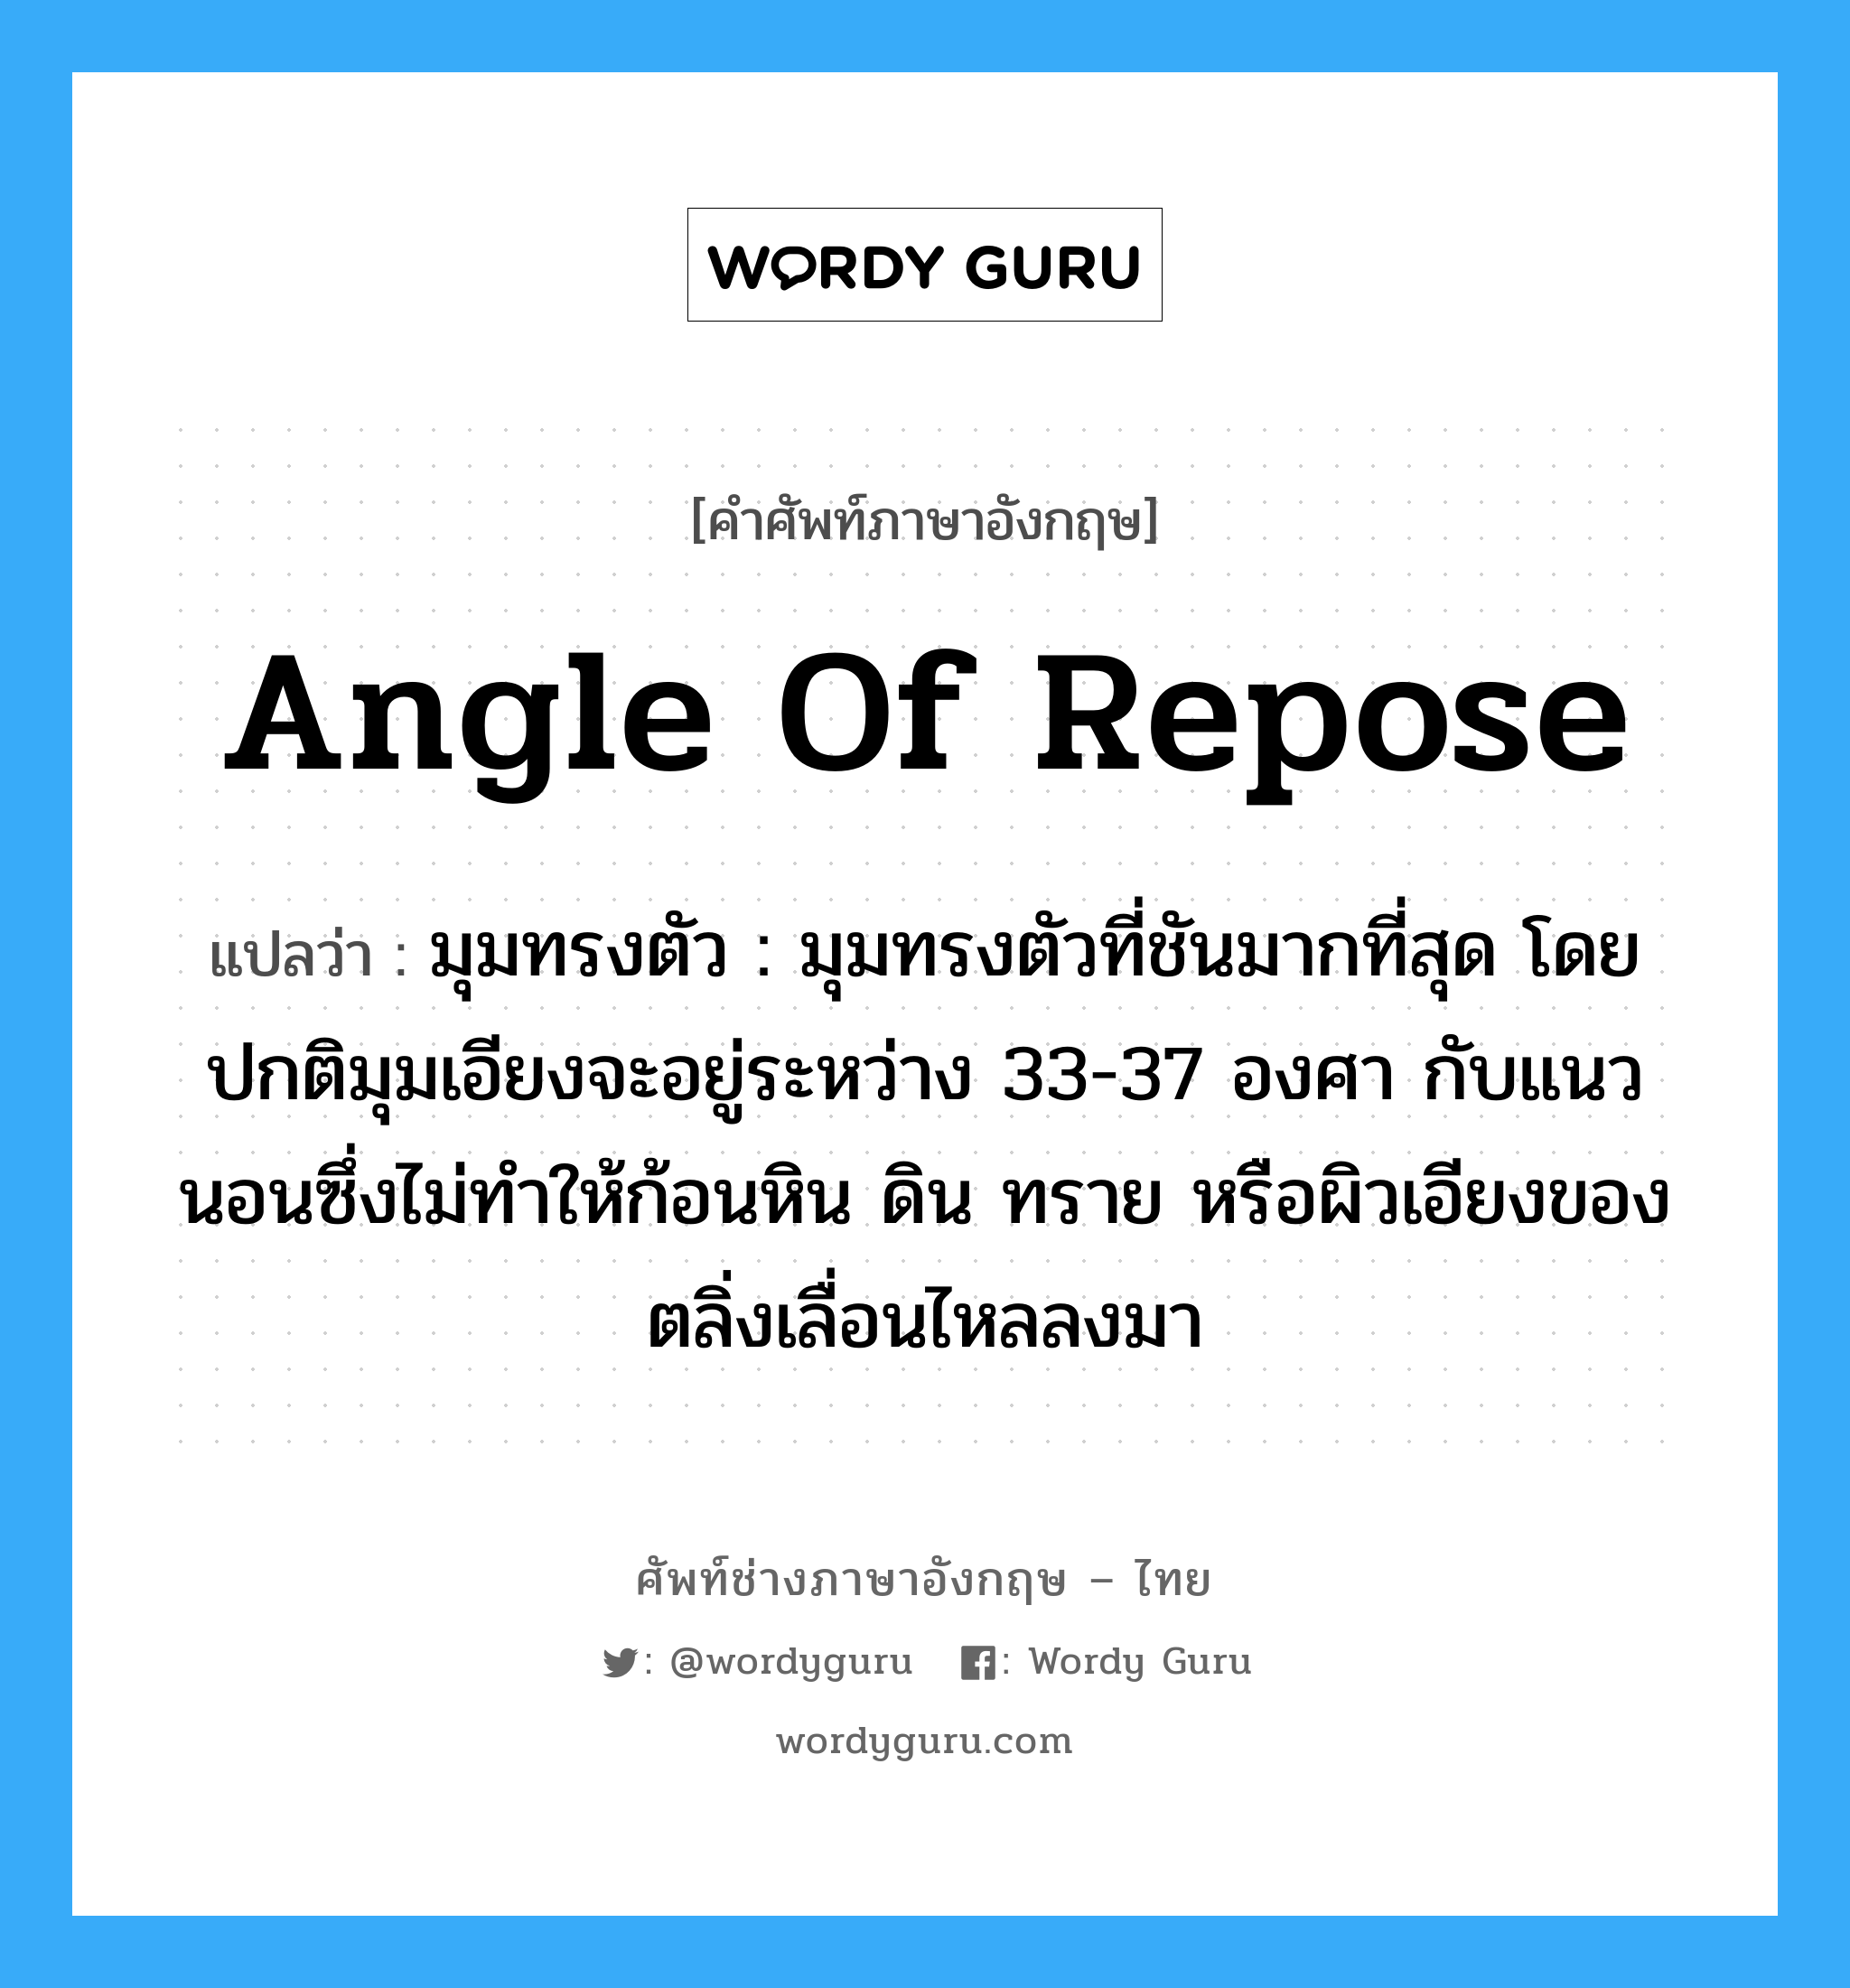 angle of repose แปลว่า?, คำศัพท์ช่างภาษาอังกฤษ - ไทย angle of repose คำศัพท์ภาษาอังกฤษ angle of repose แปลว่า มุมทรงตัว : มุมทรงตัวที่ชันมากที่สุด โดยปกติมุมเอียงจะอยู่ระหว่าง 33-37 องศา กับแนวนอนซึ่งไม่ทำให้ก้อนหิน ดิน ทราย หรือผิวเอียงของตลิ่งเลื่อนไหลลงมา